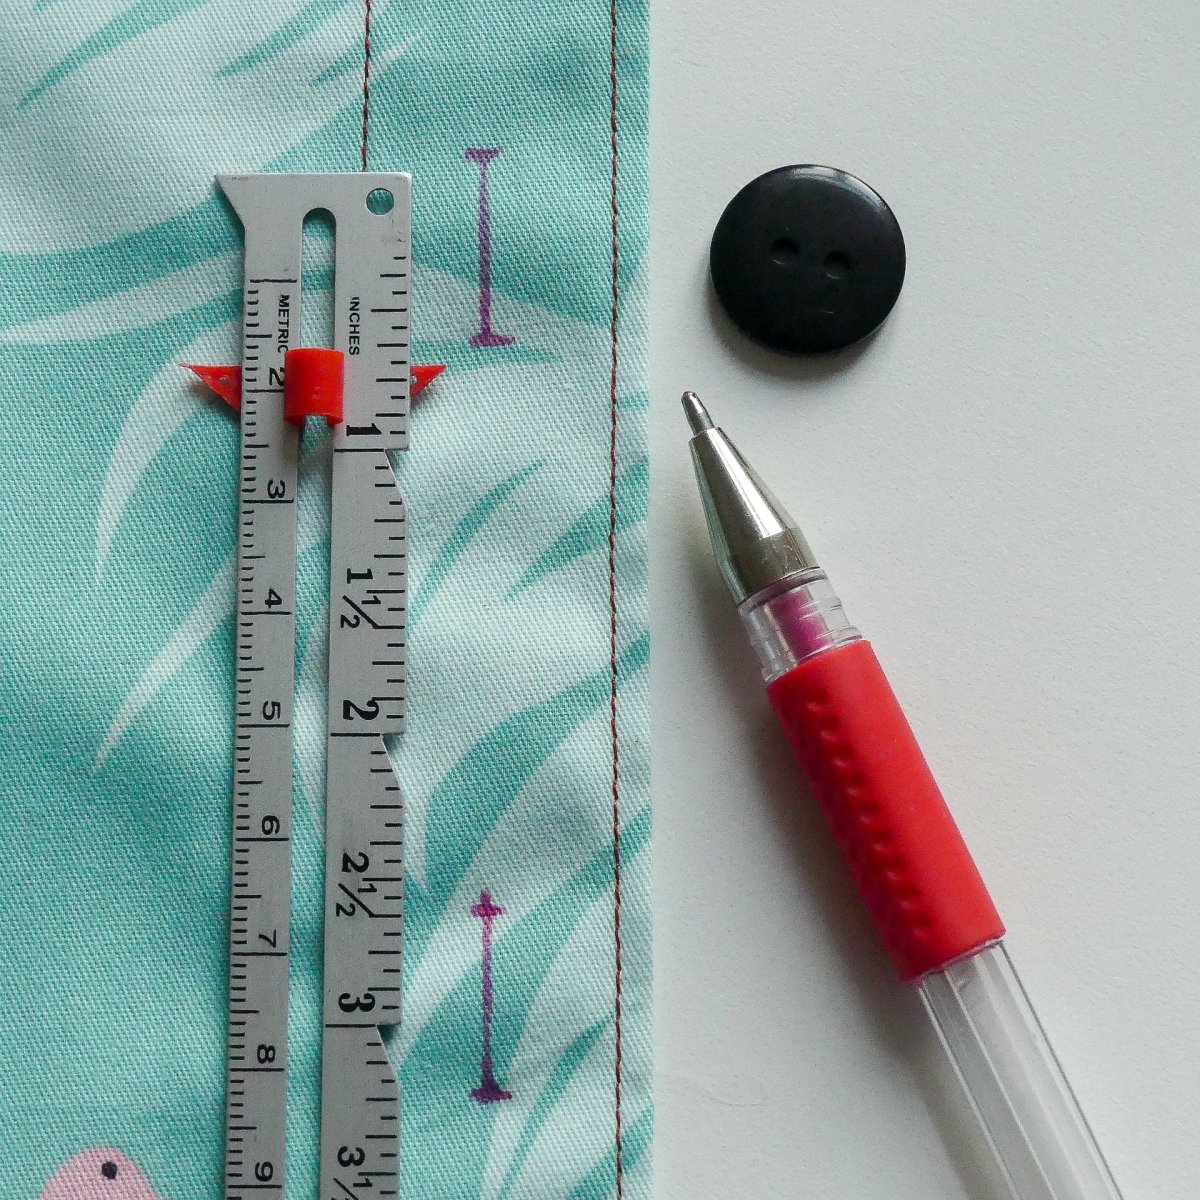 LASHALL Sewing Seam Gauge Ruler Sliding Gauge Sewing Measuring Tool(Buy 2  Receive 3) 